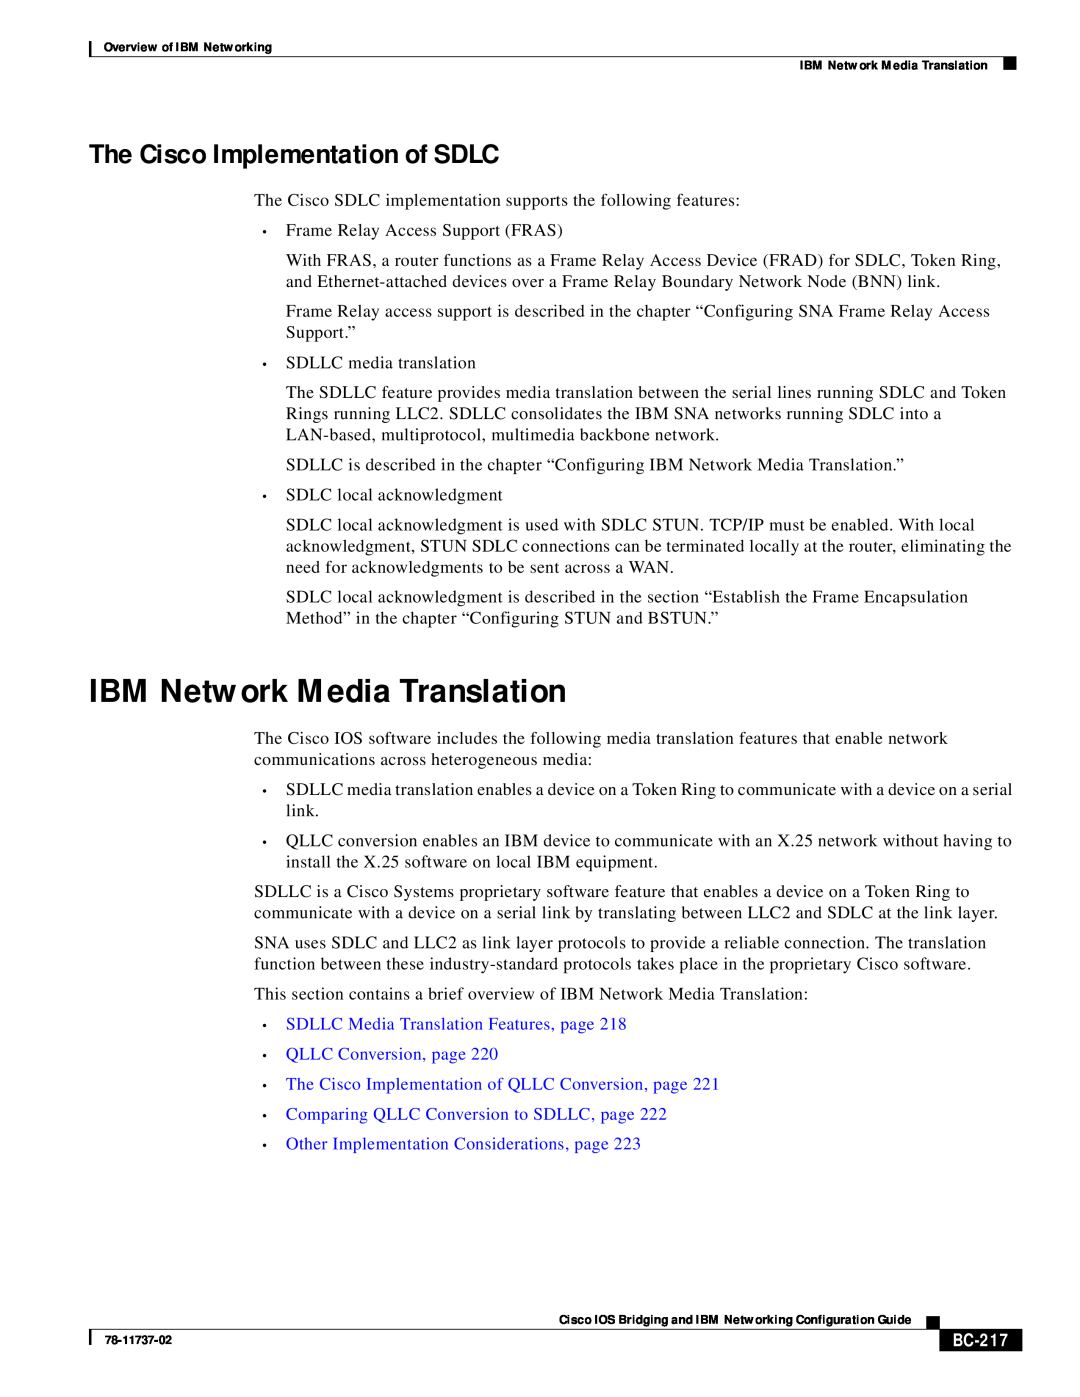 IBM BC-201 manual IBM Network Media Translation, The Cisco Implementation of SDLC, Comparing QLLC Conversion to SDLLC, page 